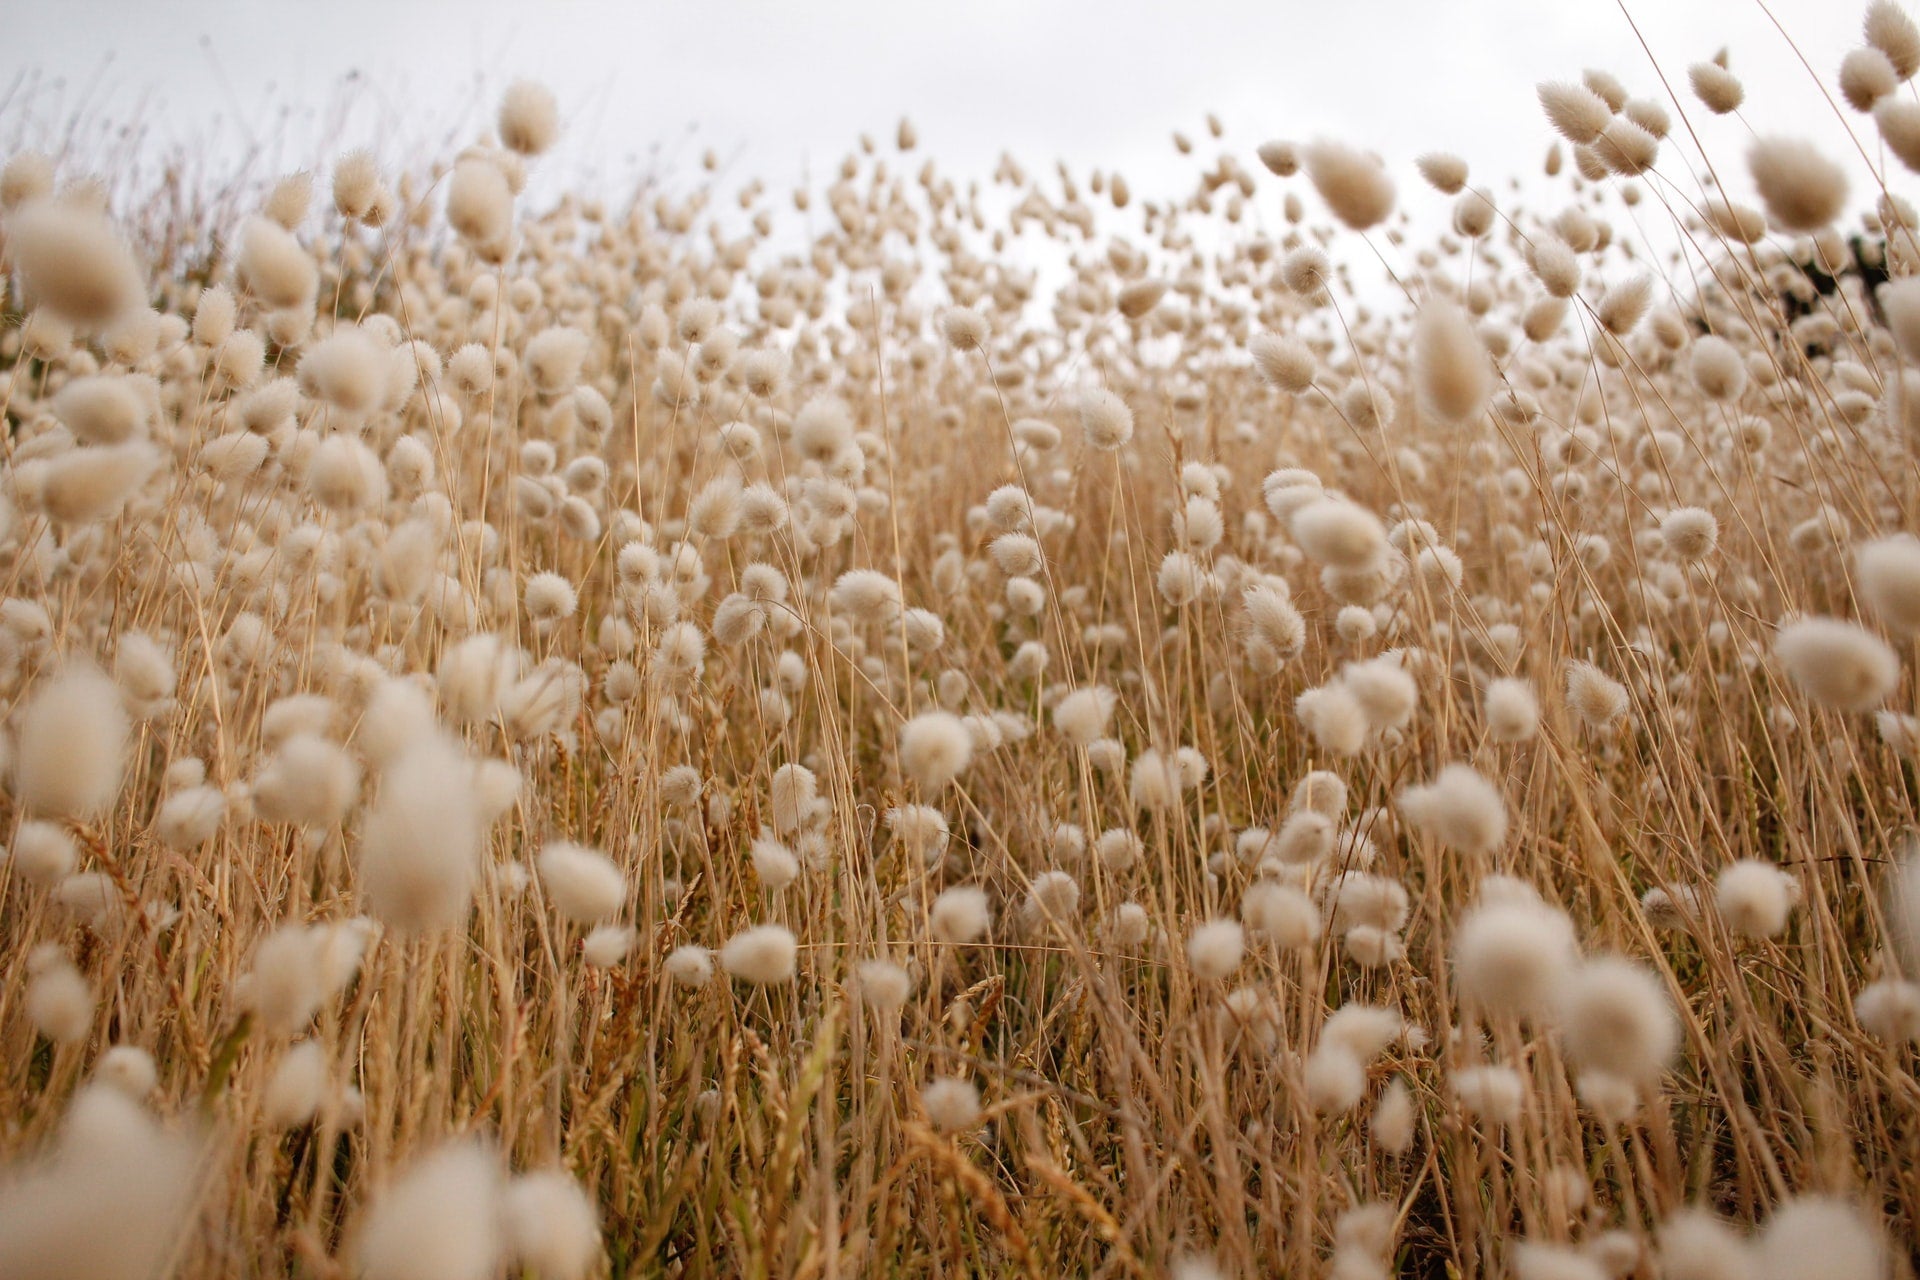 A field of organic cotton